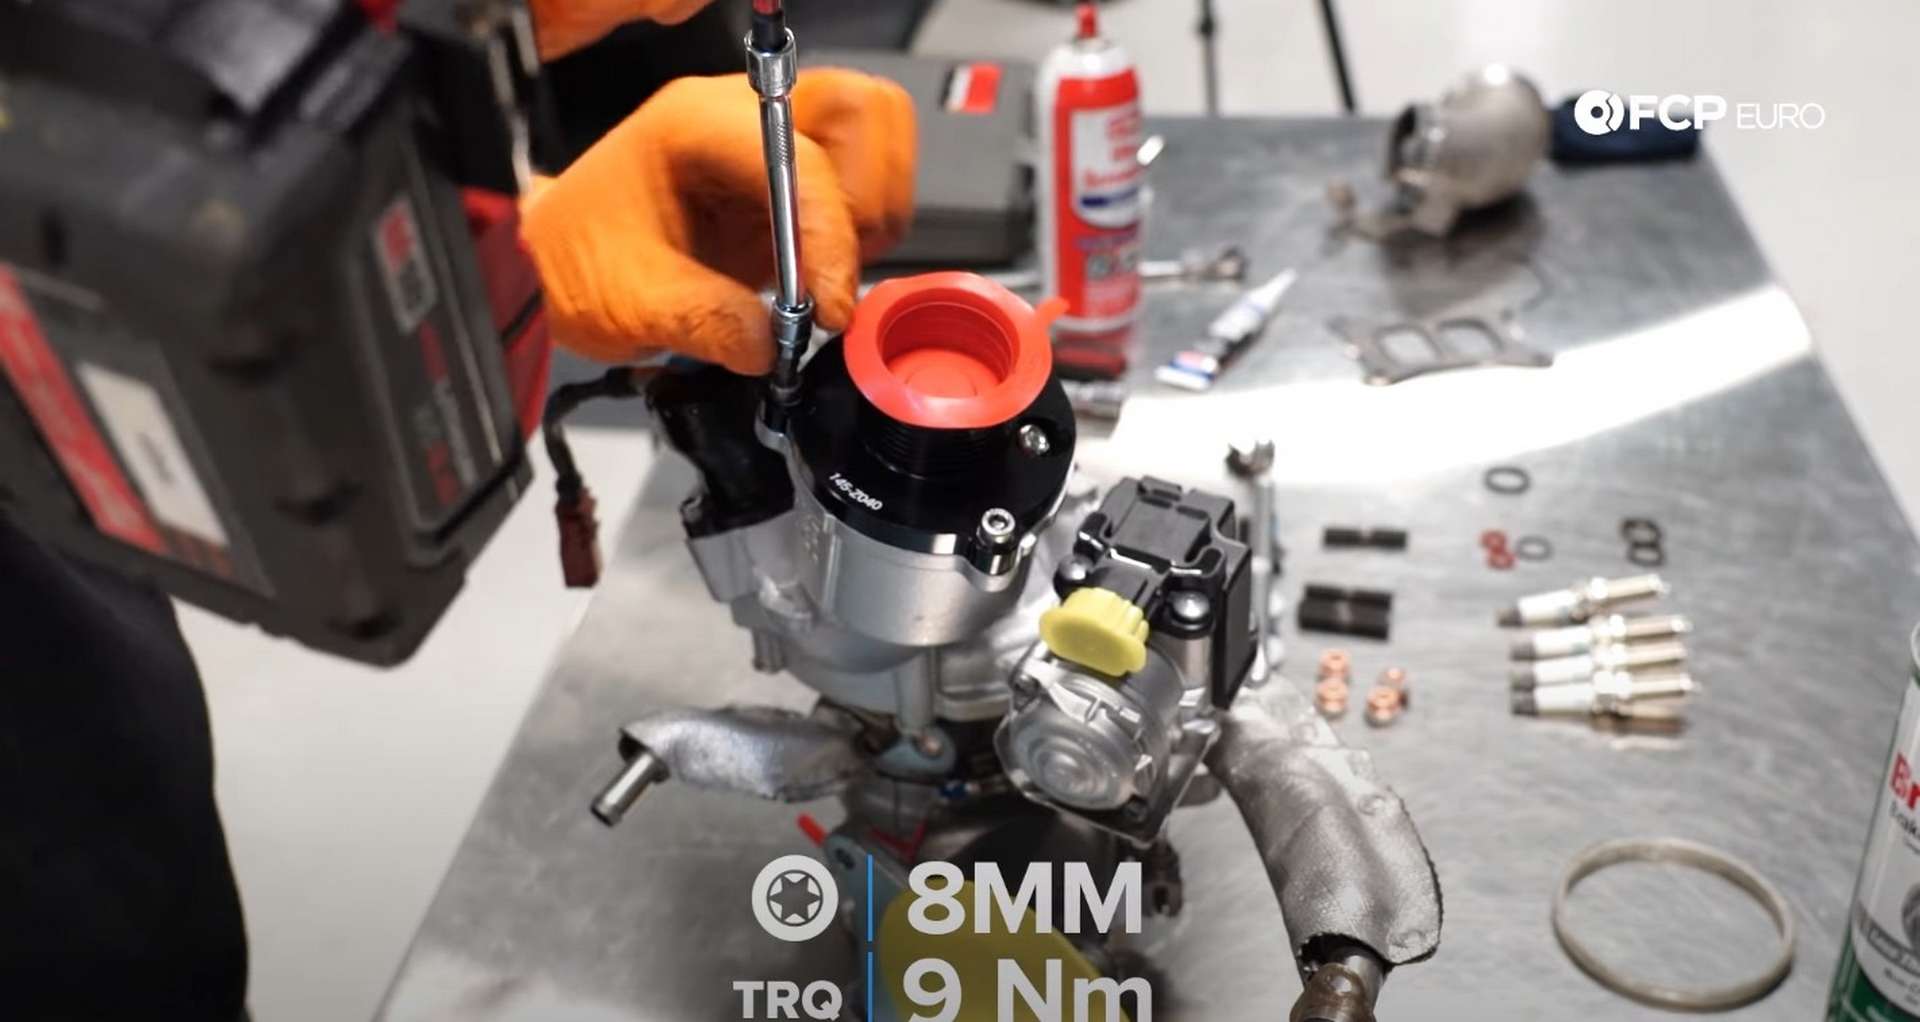 DIY MK7 VW GTI Turbocharger Upgrade tightening the turbo muffler bolts